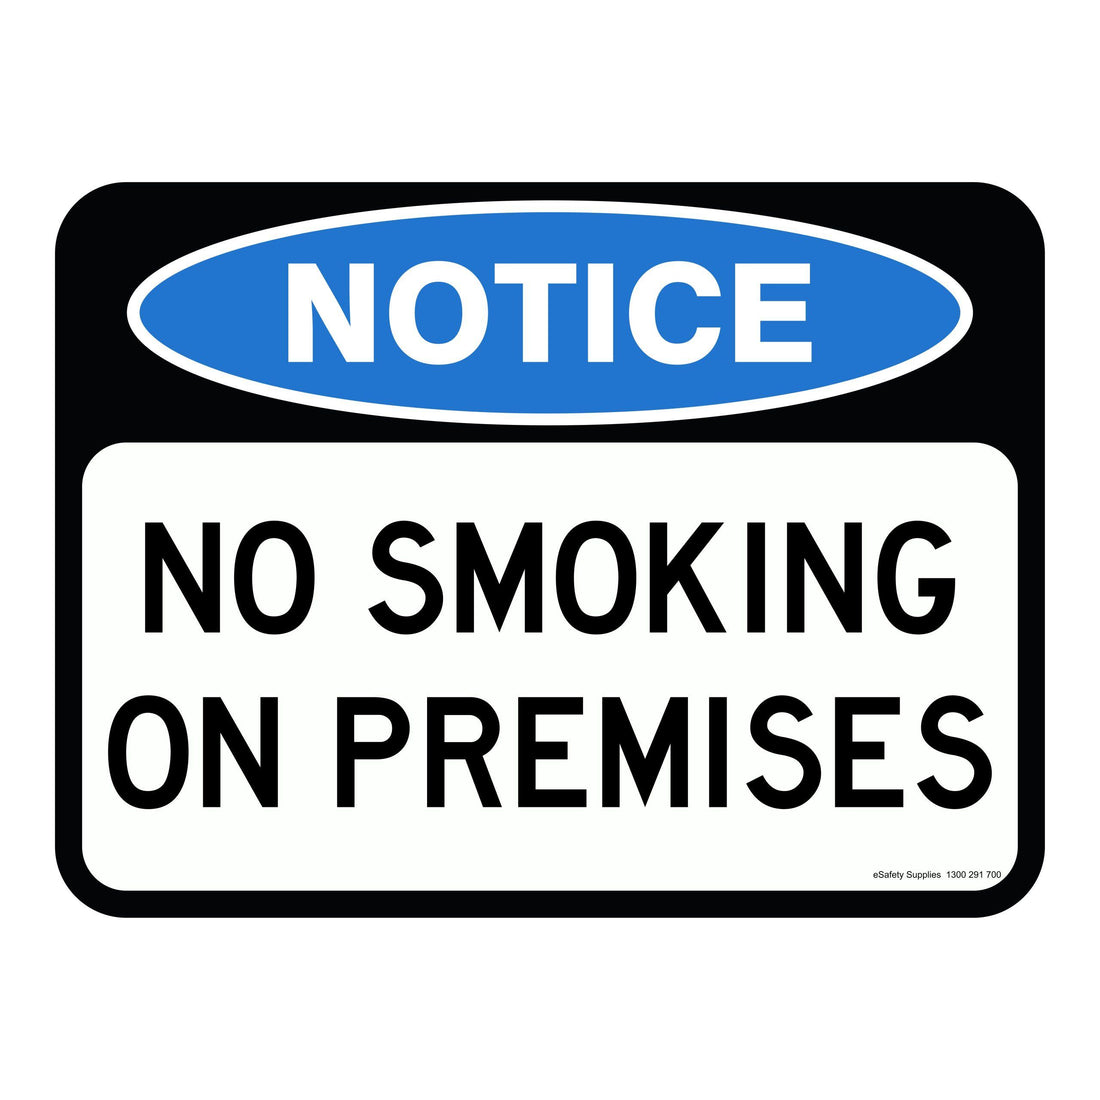 NOTICE - NO SMOKING ON PREMISES